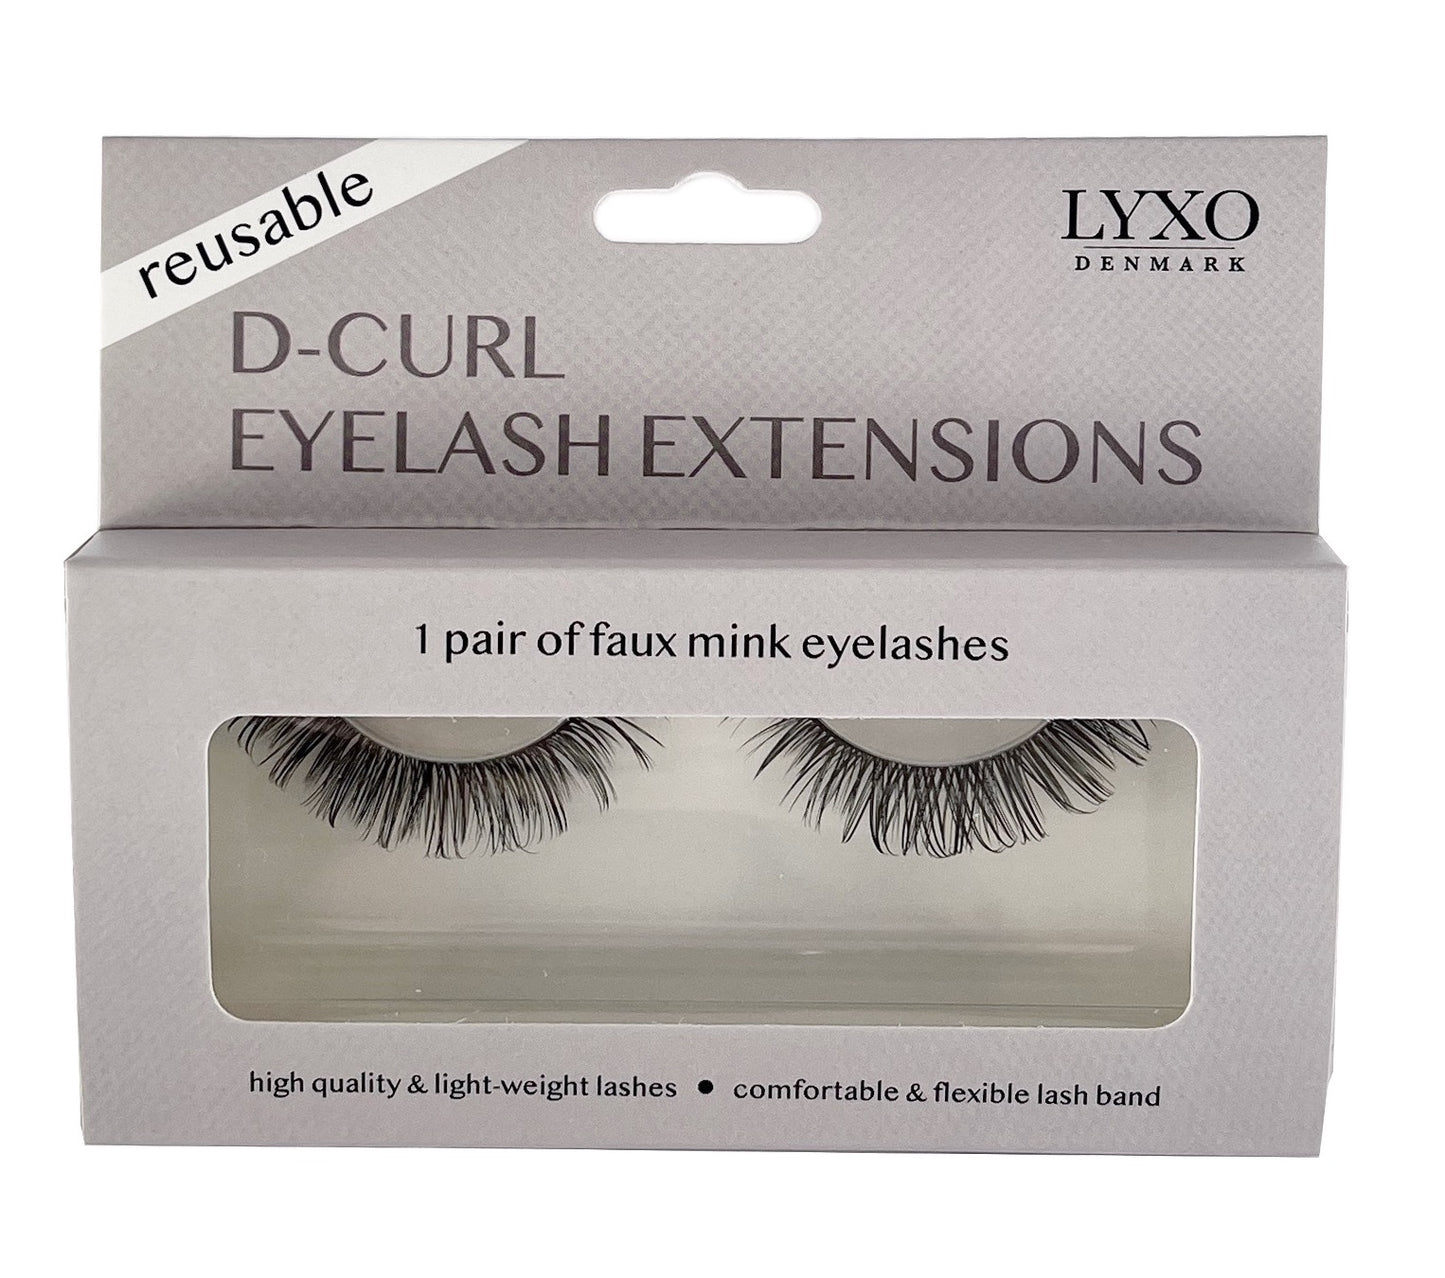 D-CURL EYELASH EXTENSIONS - false eyelashes